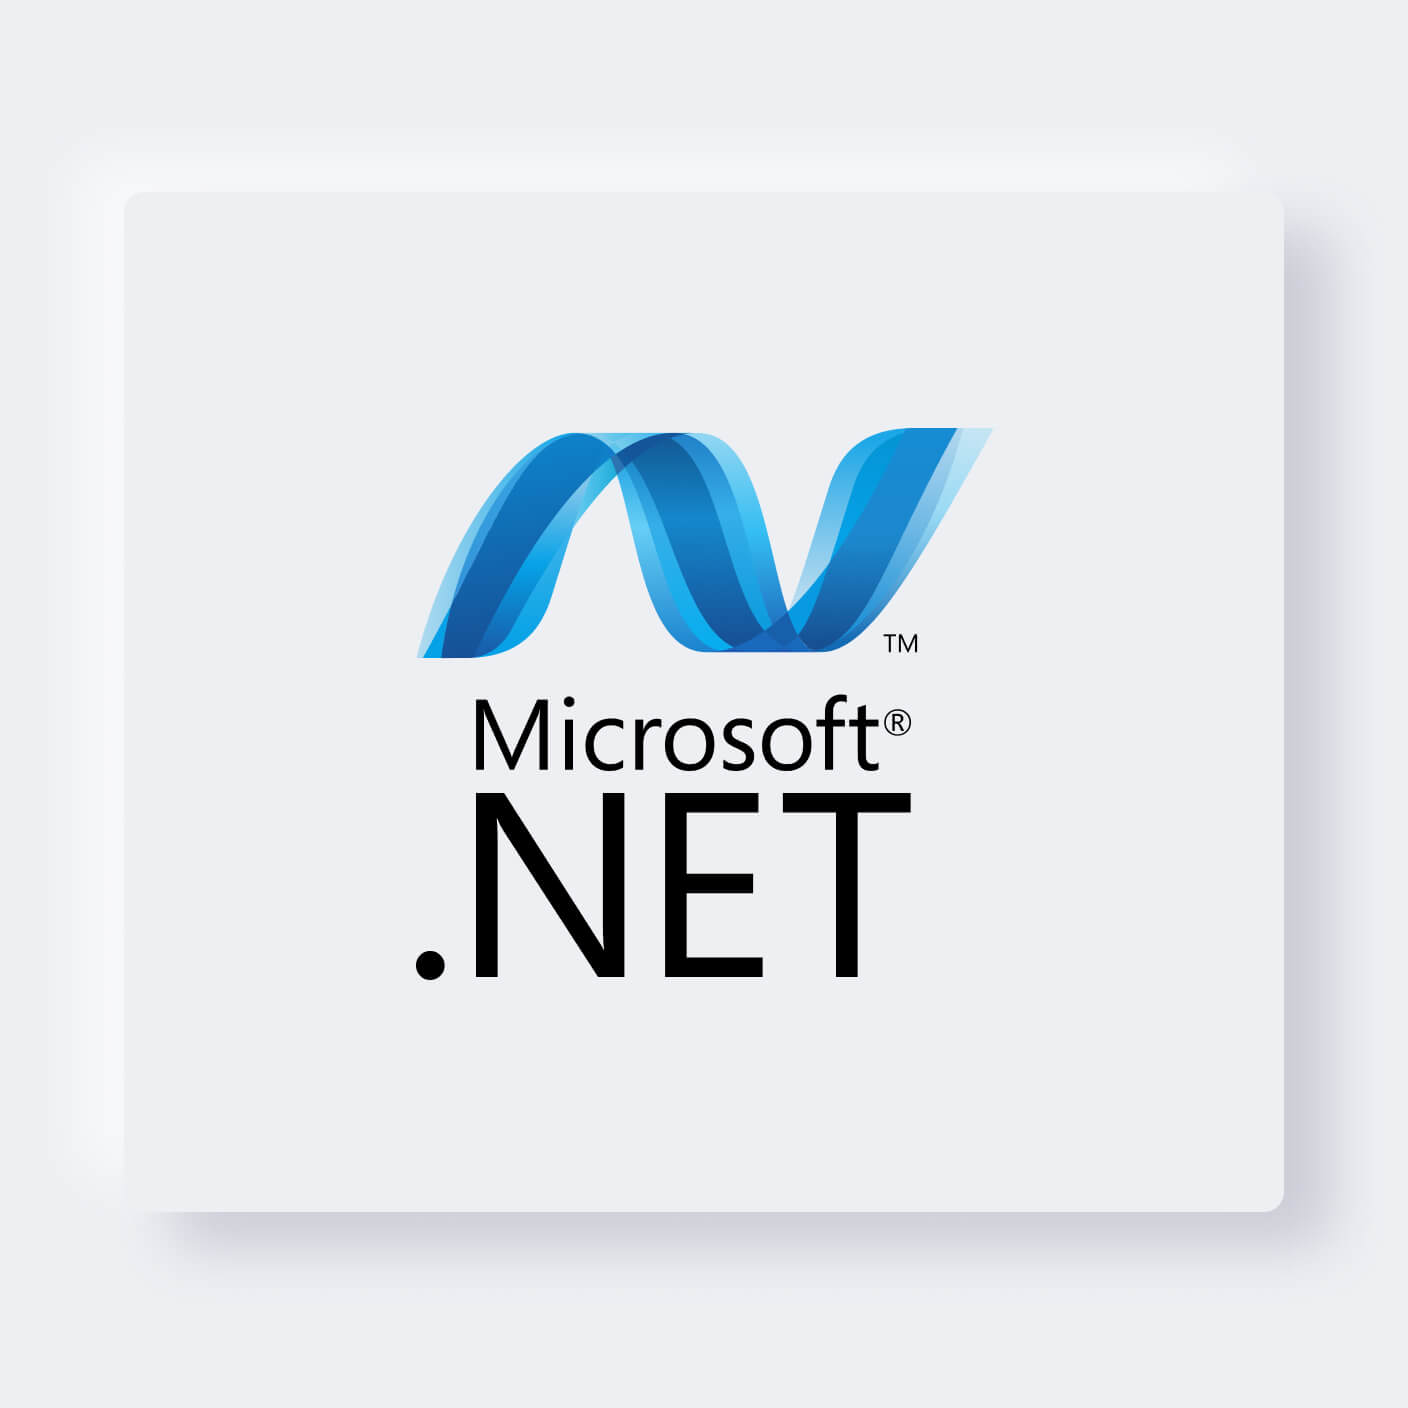 .NET - coding language